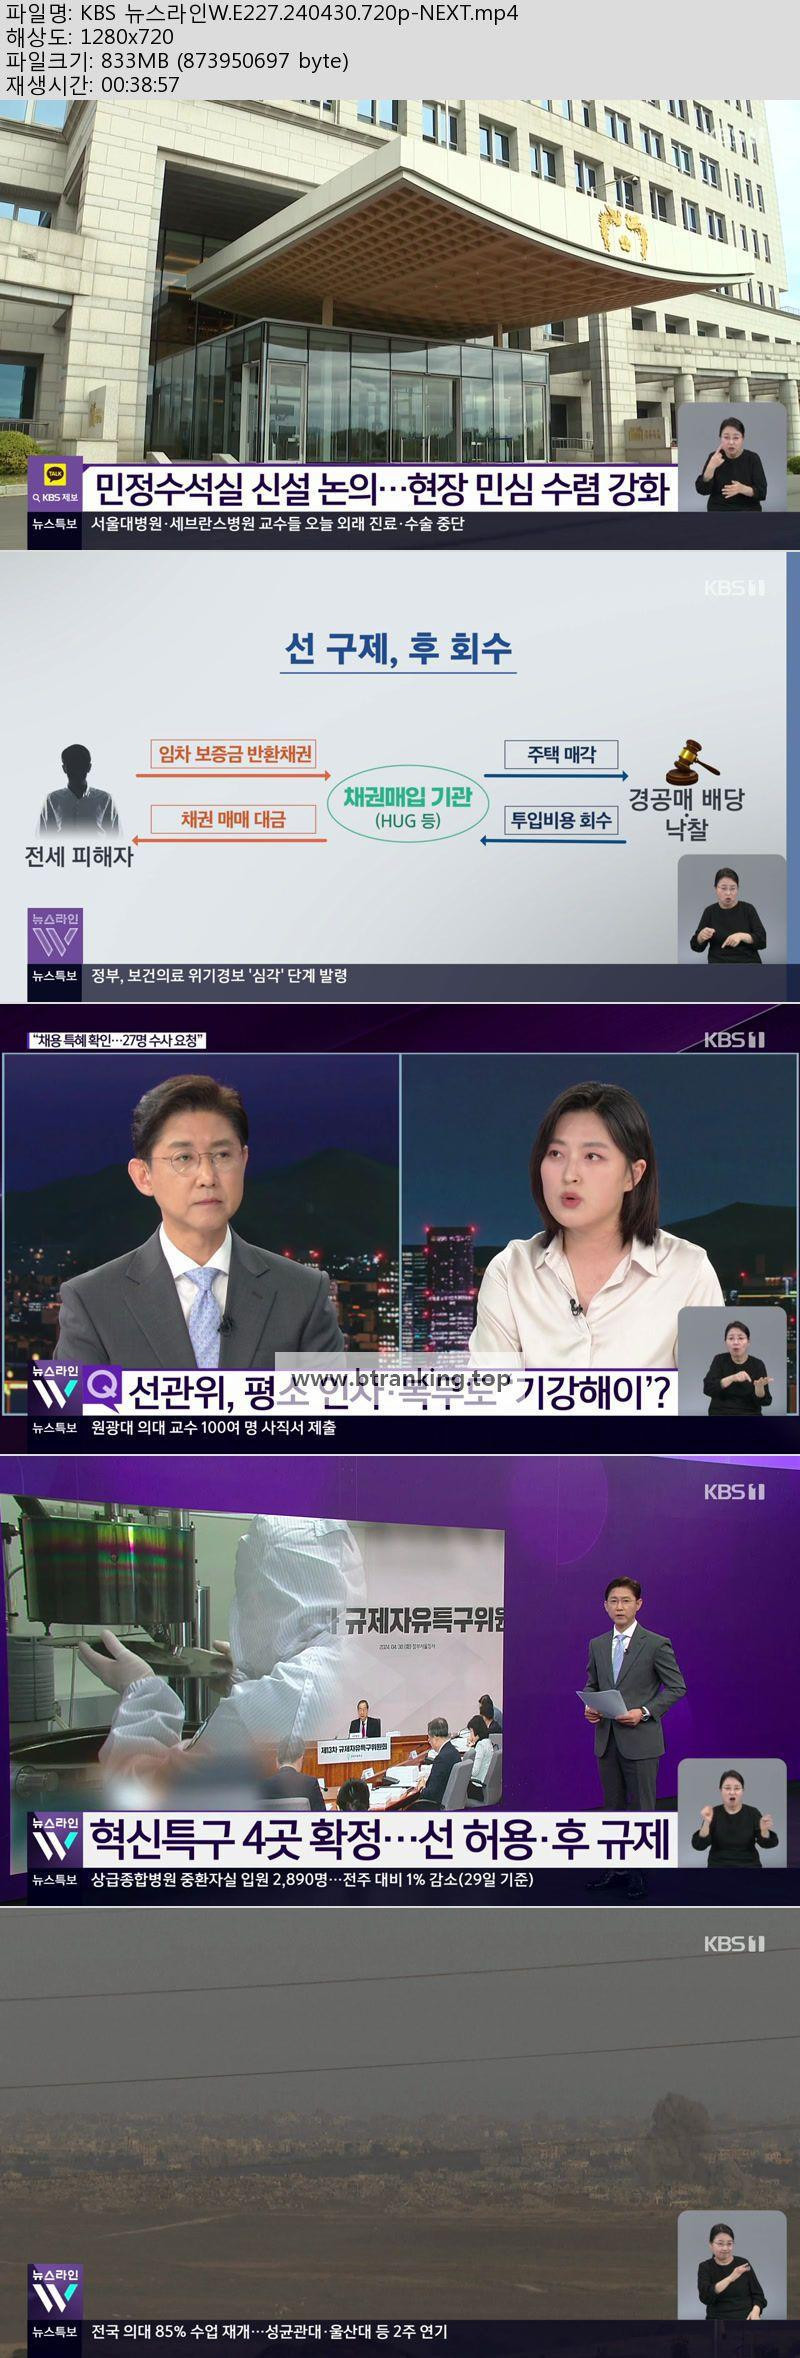 KBS 뉴스라인W.E227.240430.720p-NEXT